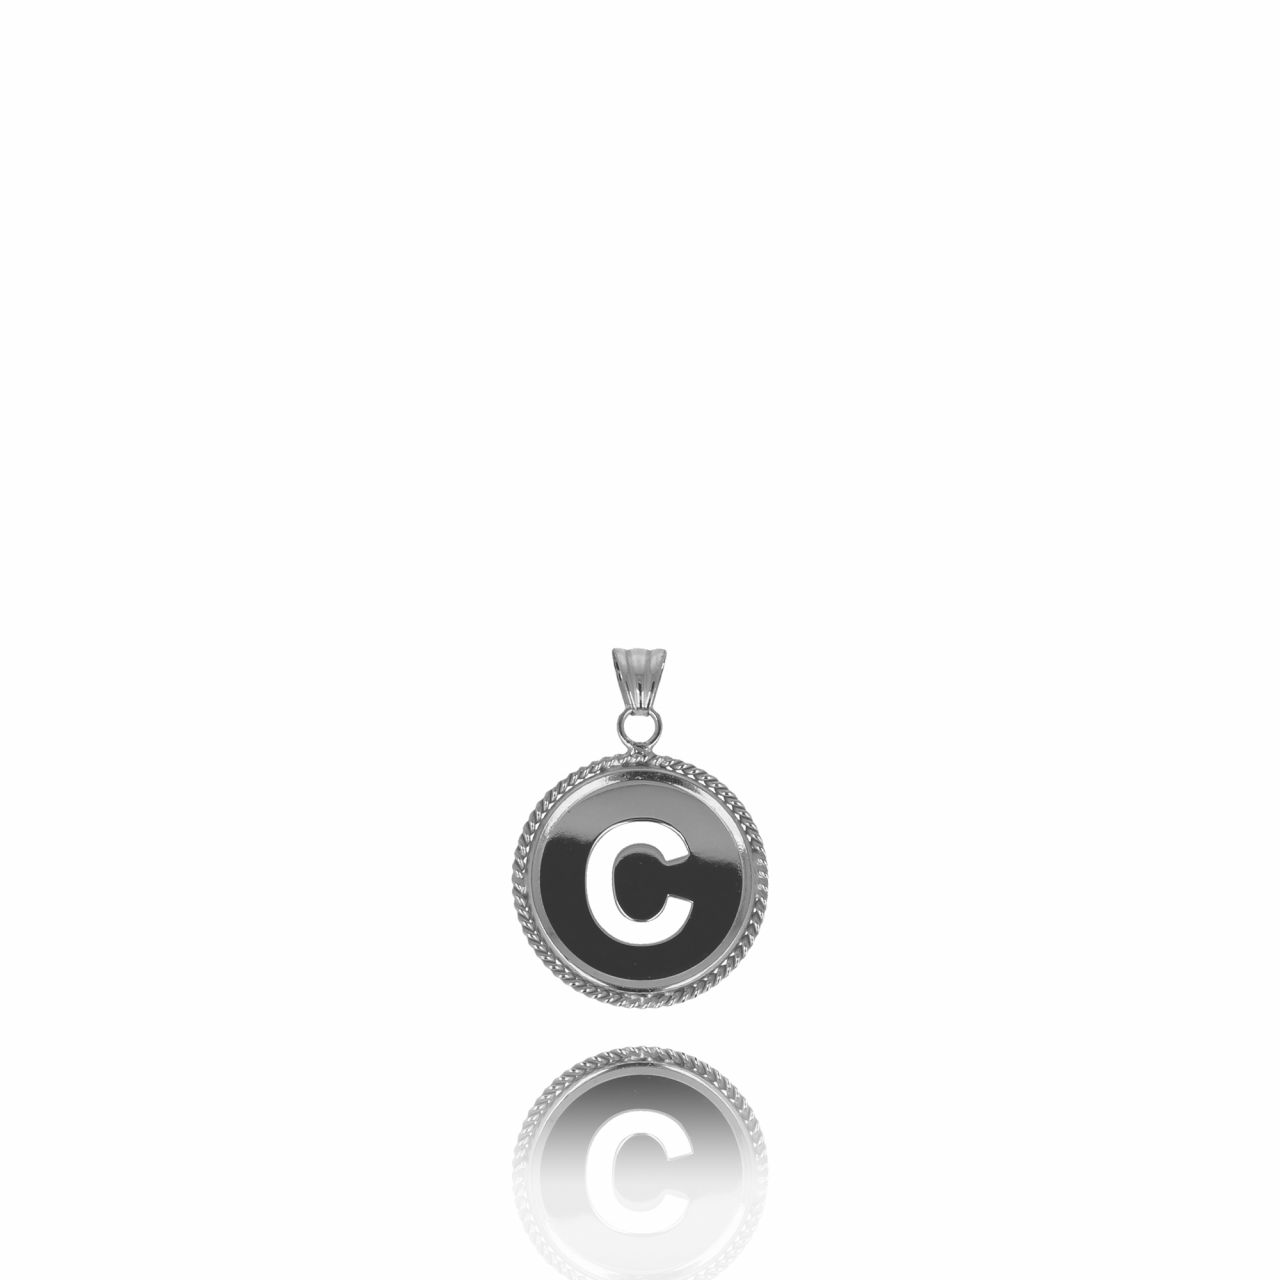 Zilveren Initial Medallion pendantlott-theme.productDescriptionPage.SEO.byTheBrand